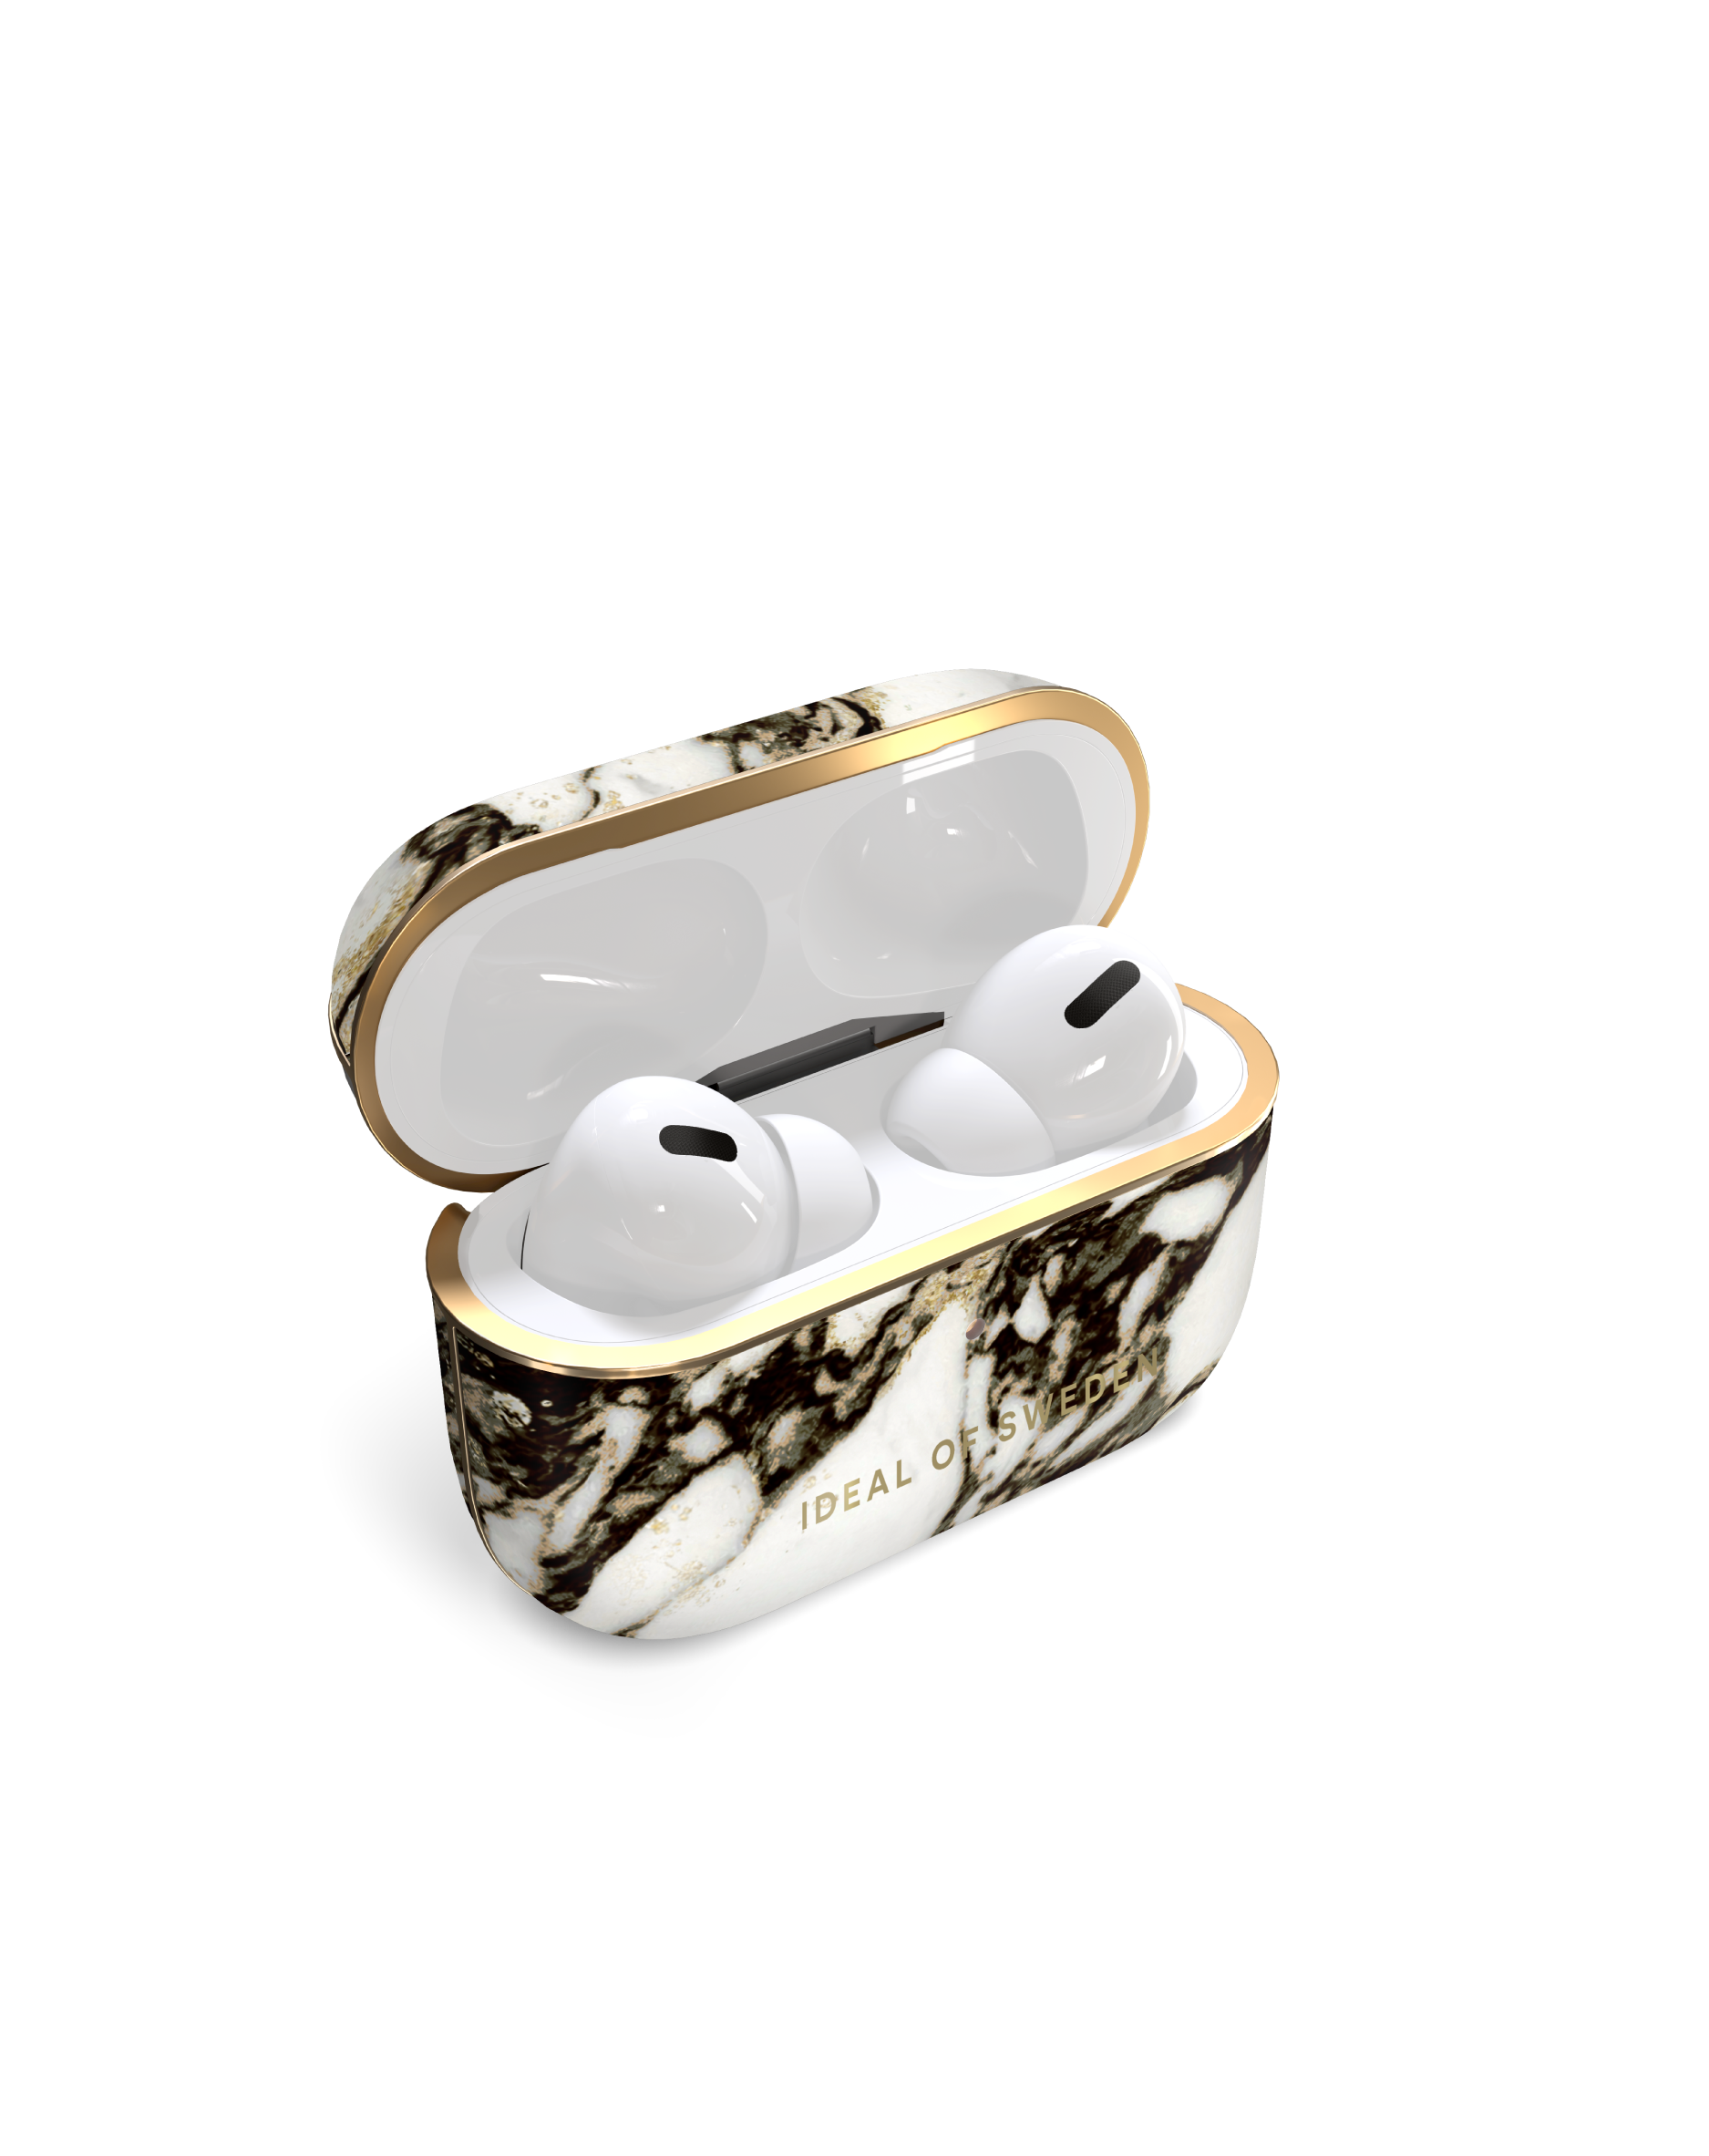 AirPod Marble IDFAPCMR21-PRO-380 für: Full Apple Calacatta Golden Case passend SWEDEN Cover OF IDEAL